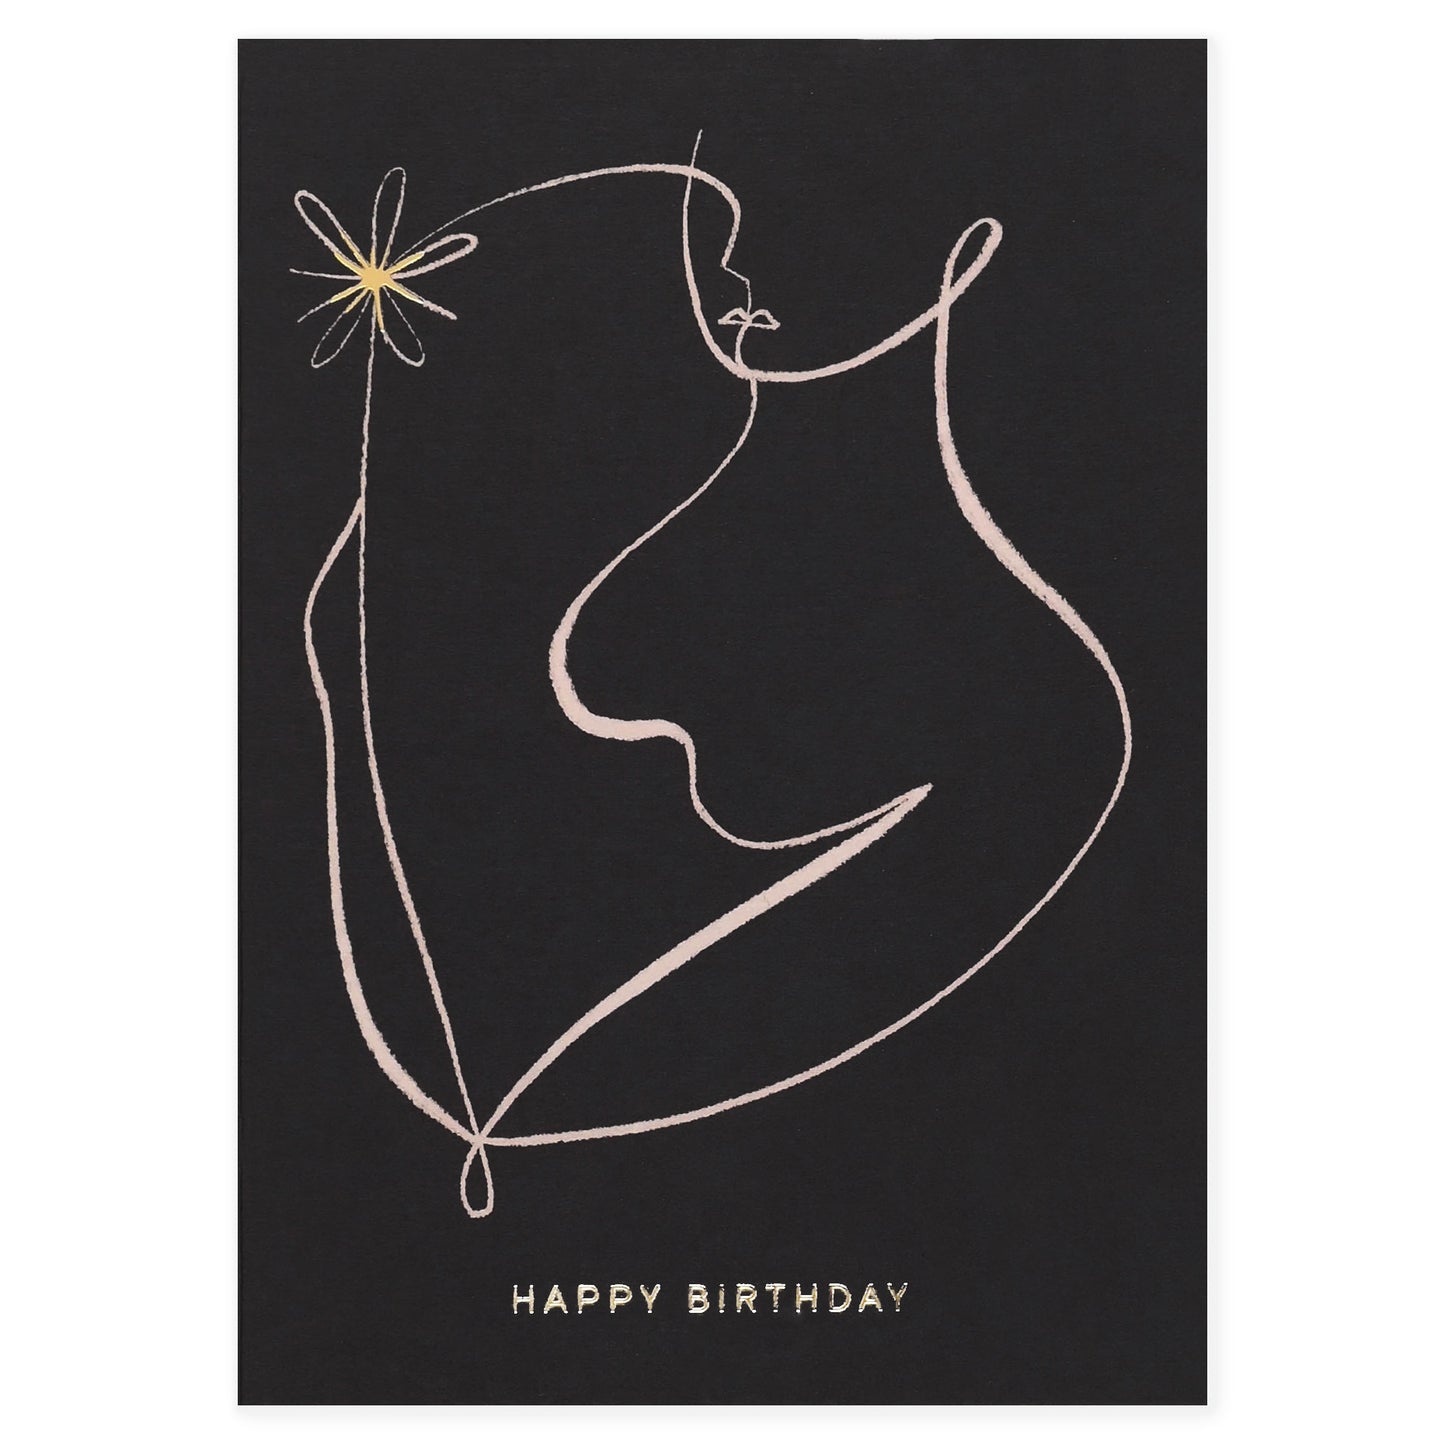 Wrap Lady and Flower Birthday Card 